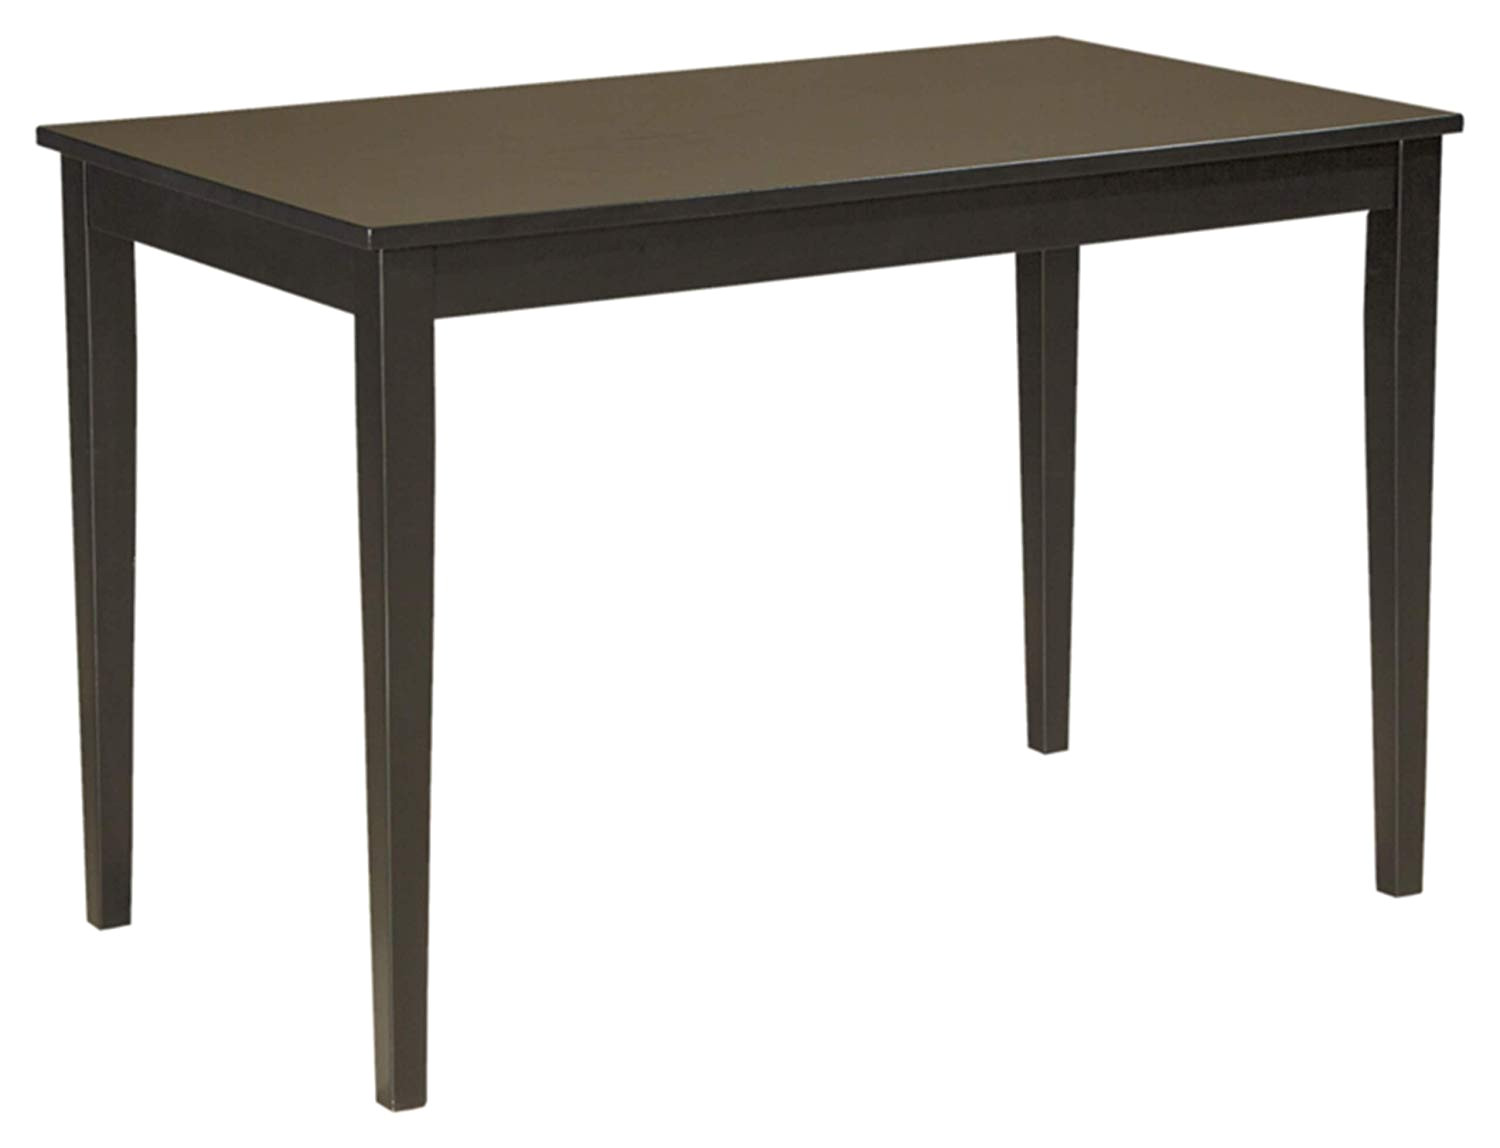 Big Lots Rustic Chair Side Table Amazon Com ashley Furniture Signature Design Kimonte Dining Room